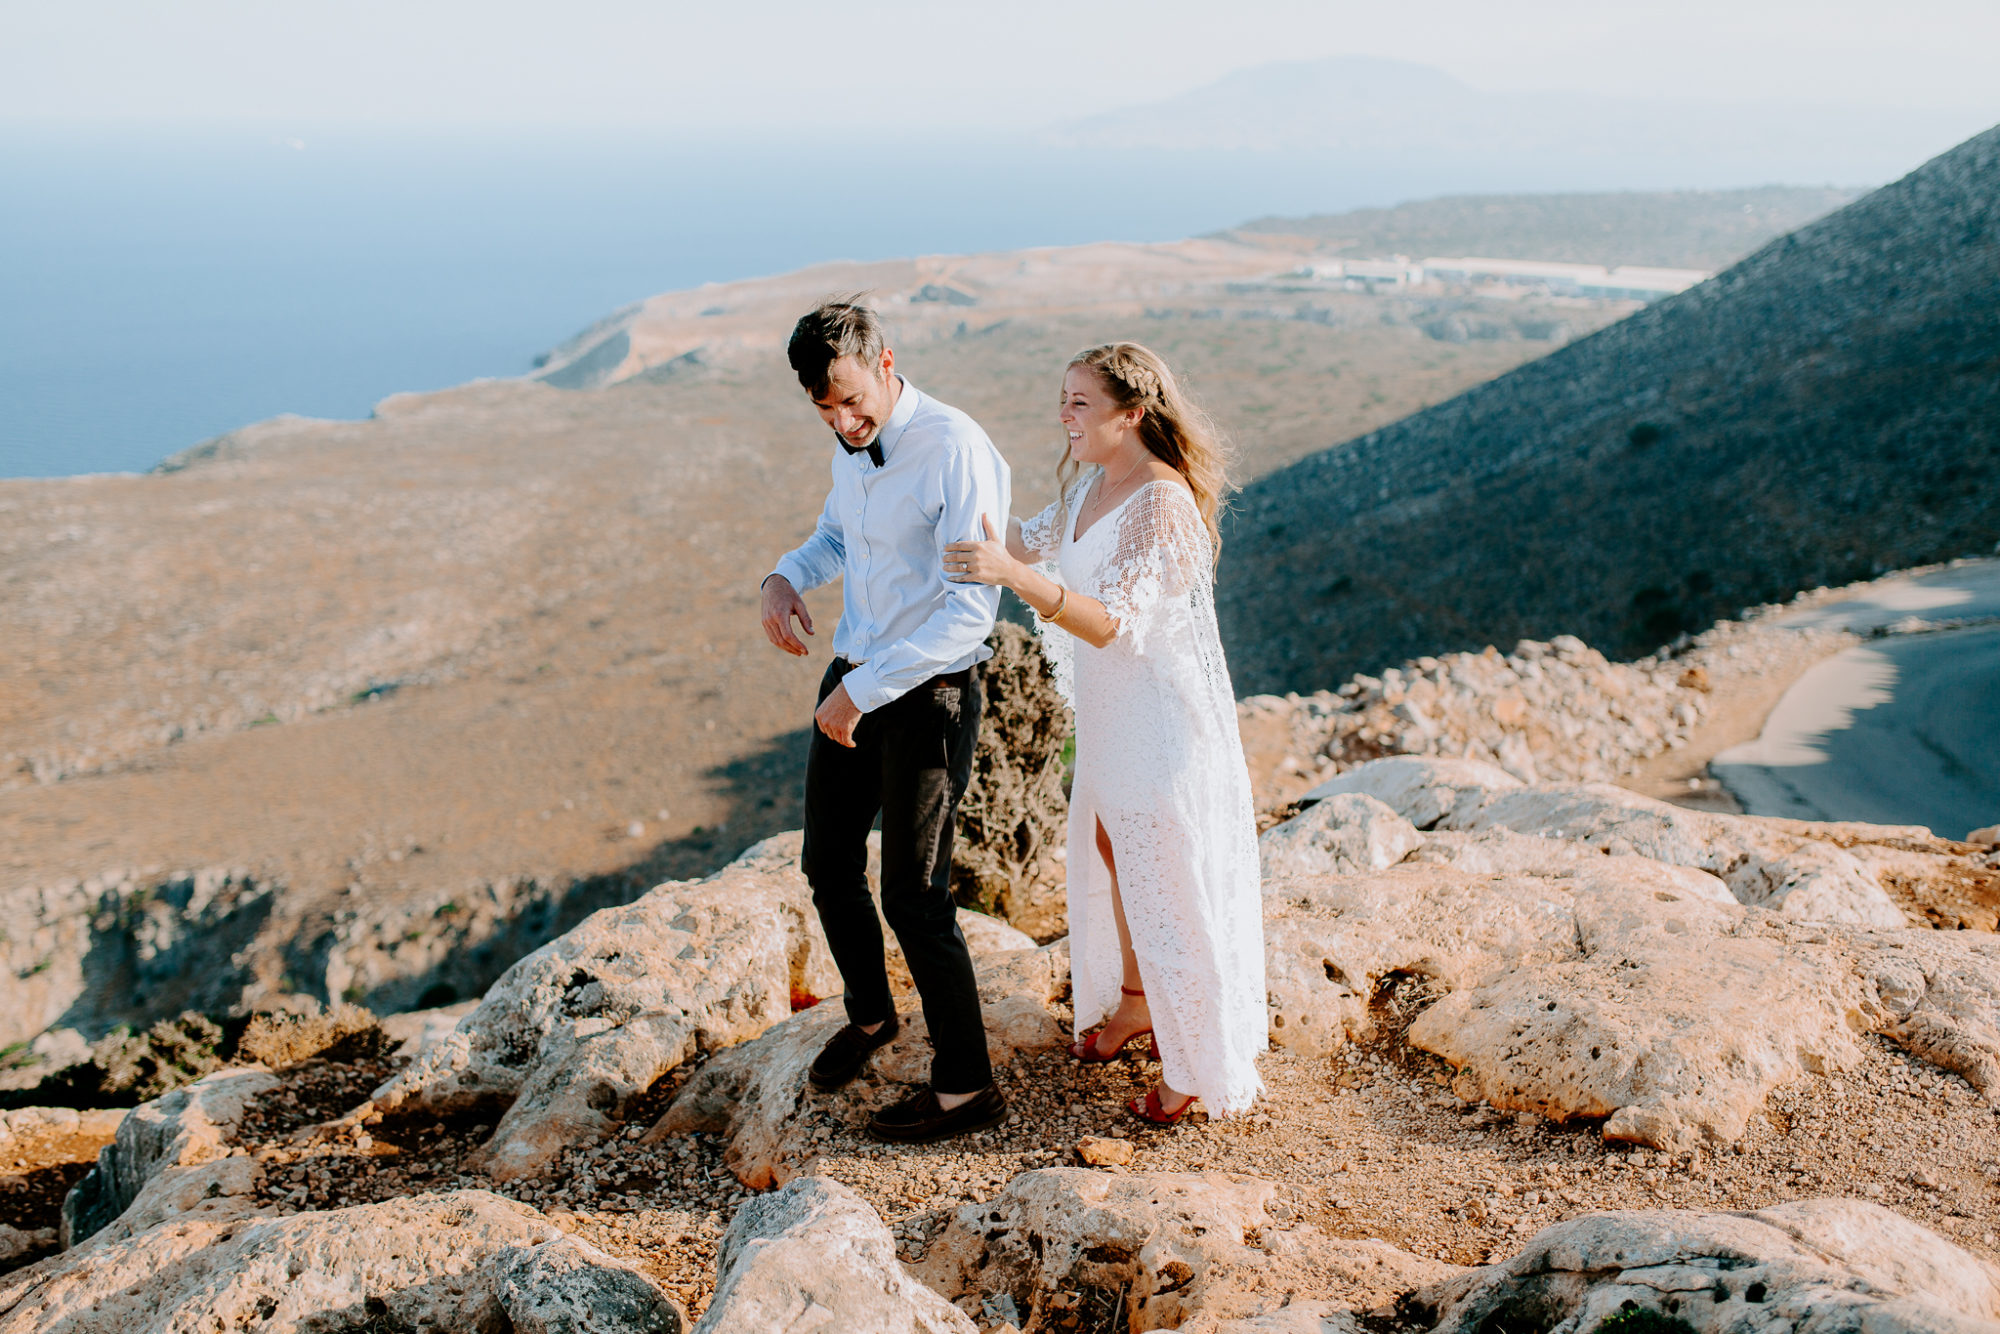 A cliffside elopement in Crete